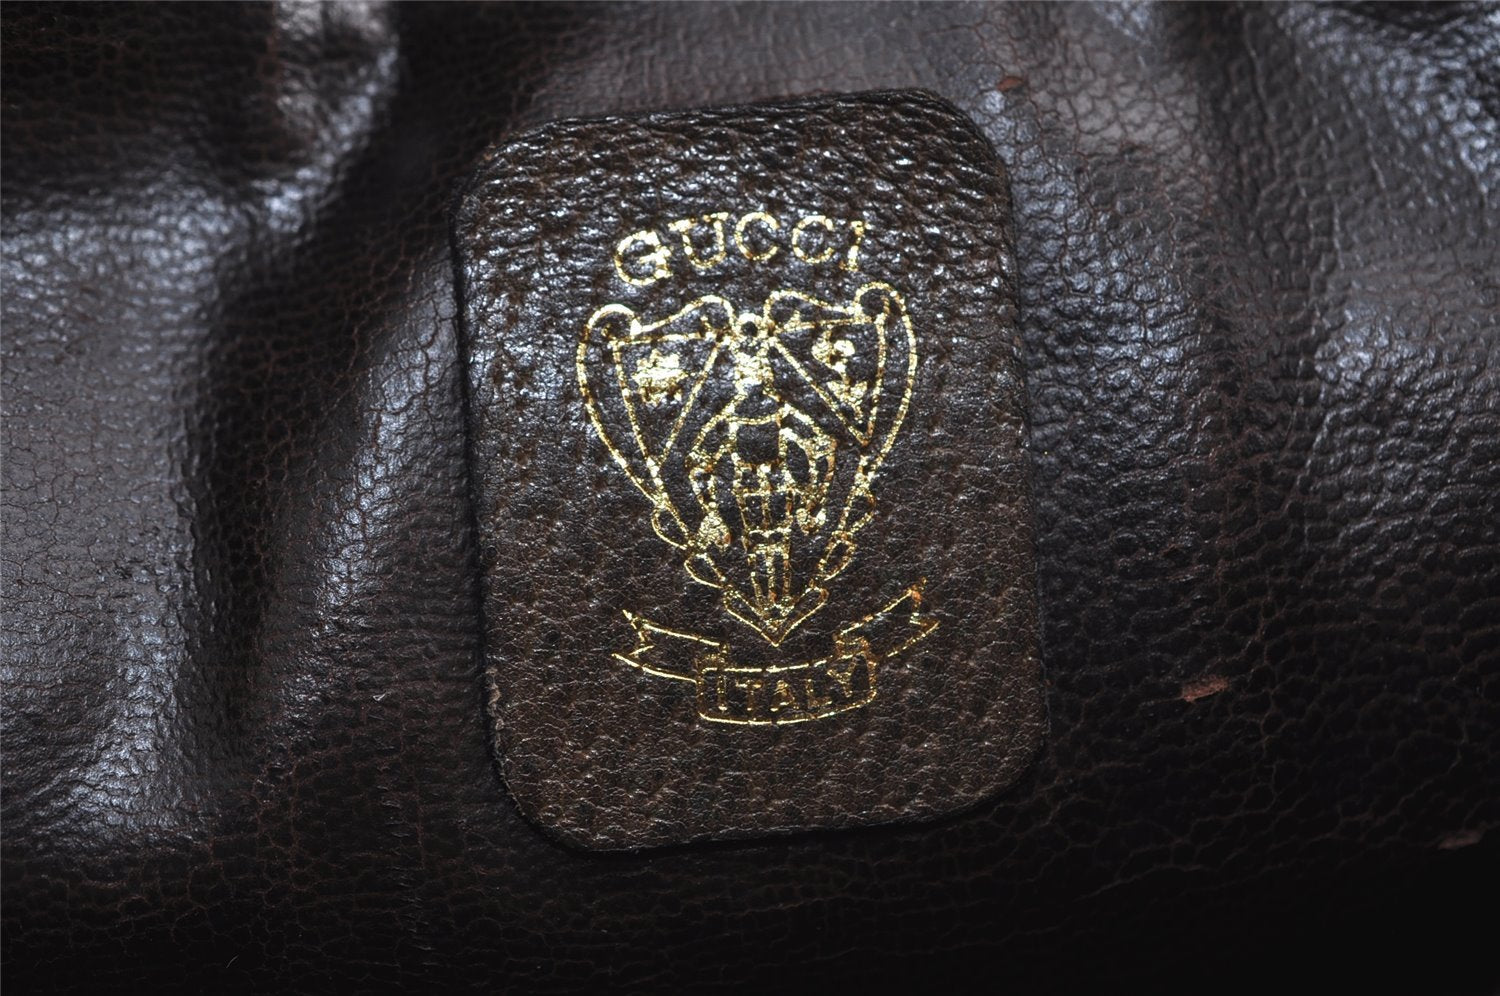 Authentic GUCCI Web Sherry Line Shoulder Cross Bag GG PVC Leather Brown 9267J